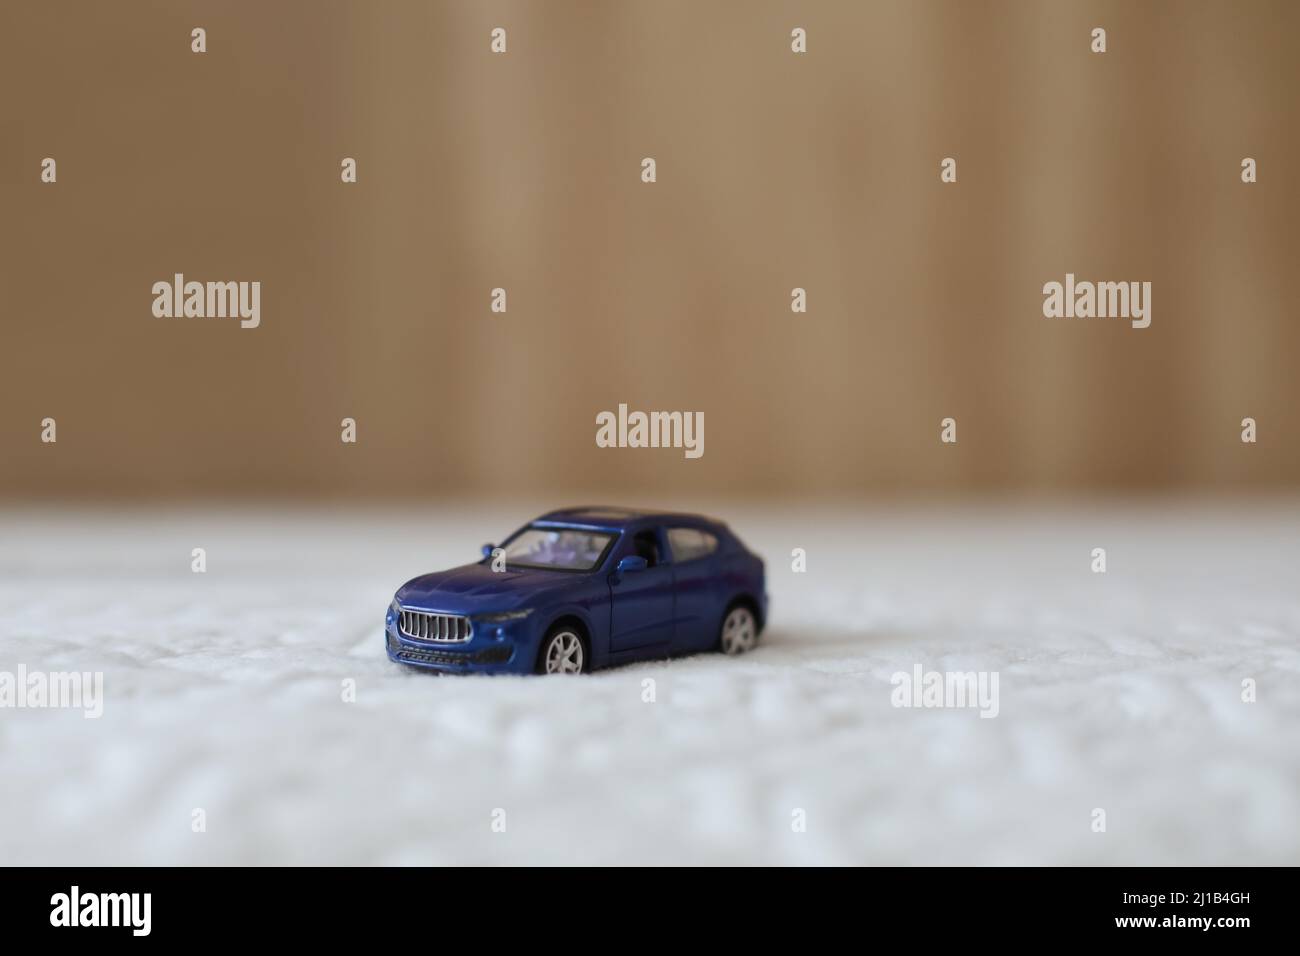 Miniature blue plastic toy car on textile material macro shot. close-up  Stock Photo